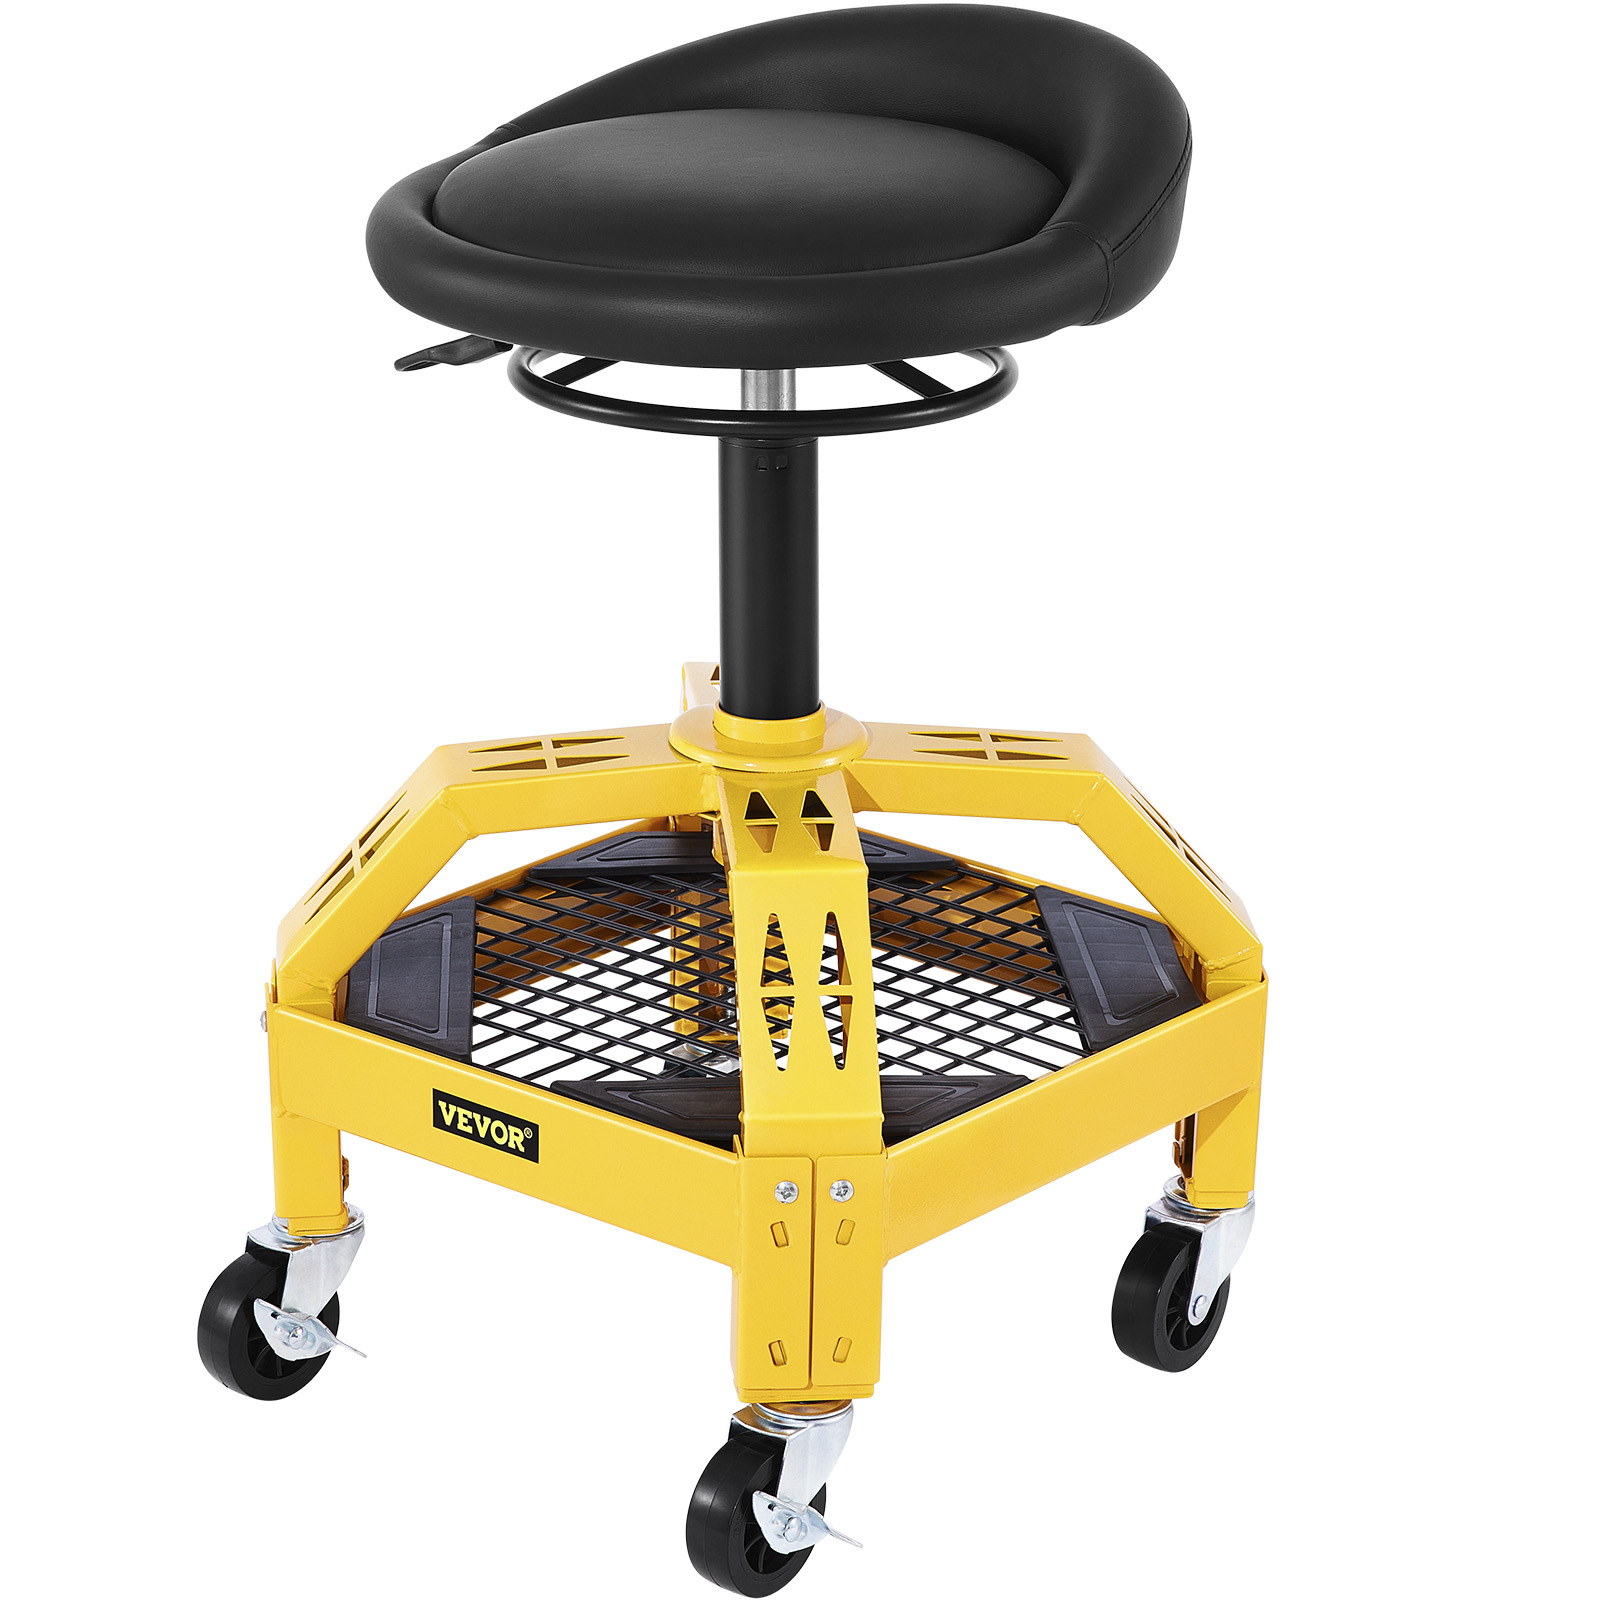 Rolling Creeper Seat Mechanic Stool Chair Repair Tools Tray Shop Auto Car Garage w/ 300 lbs Capacity 